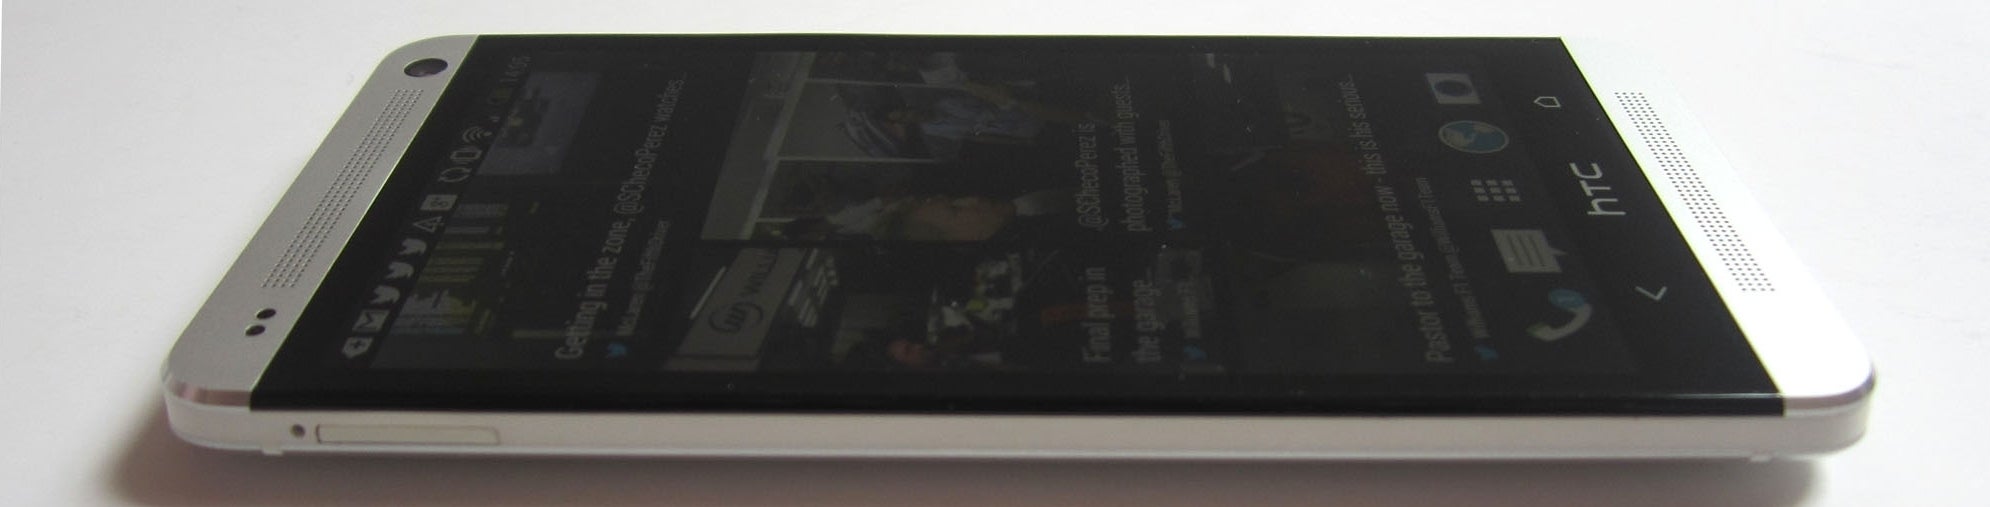 Imagem para HTC One - Análise